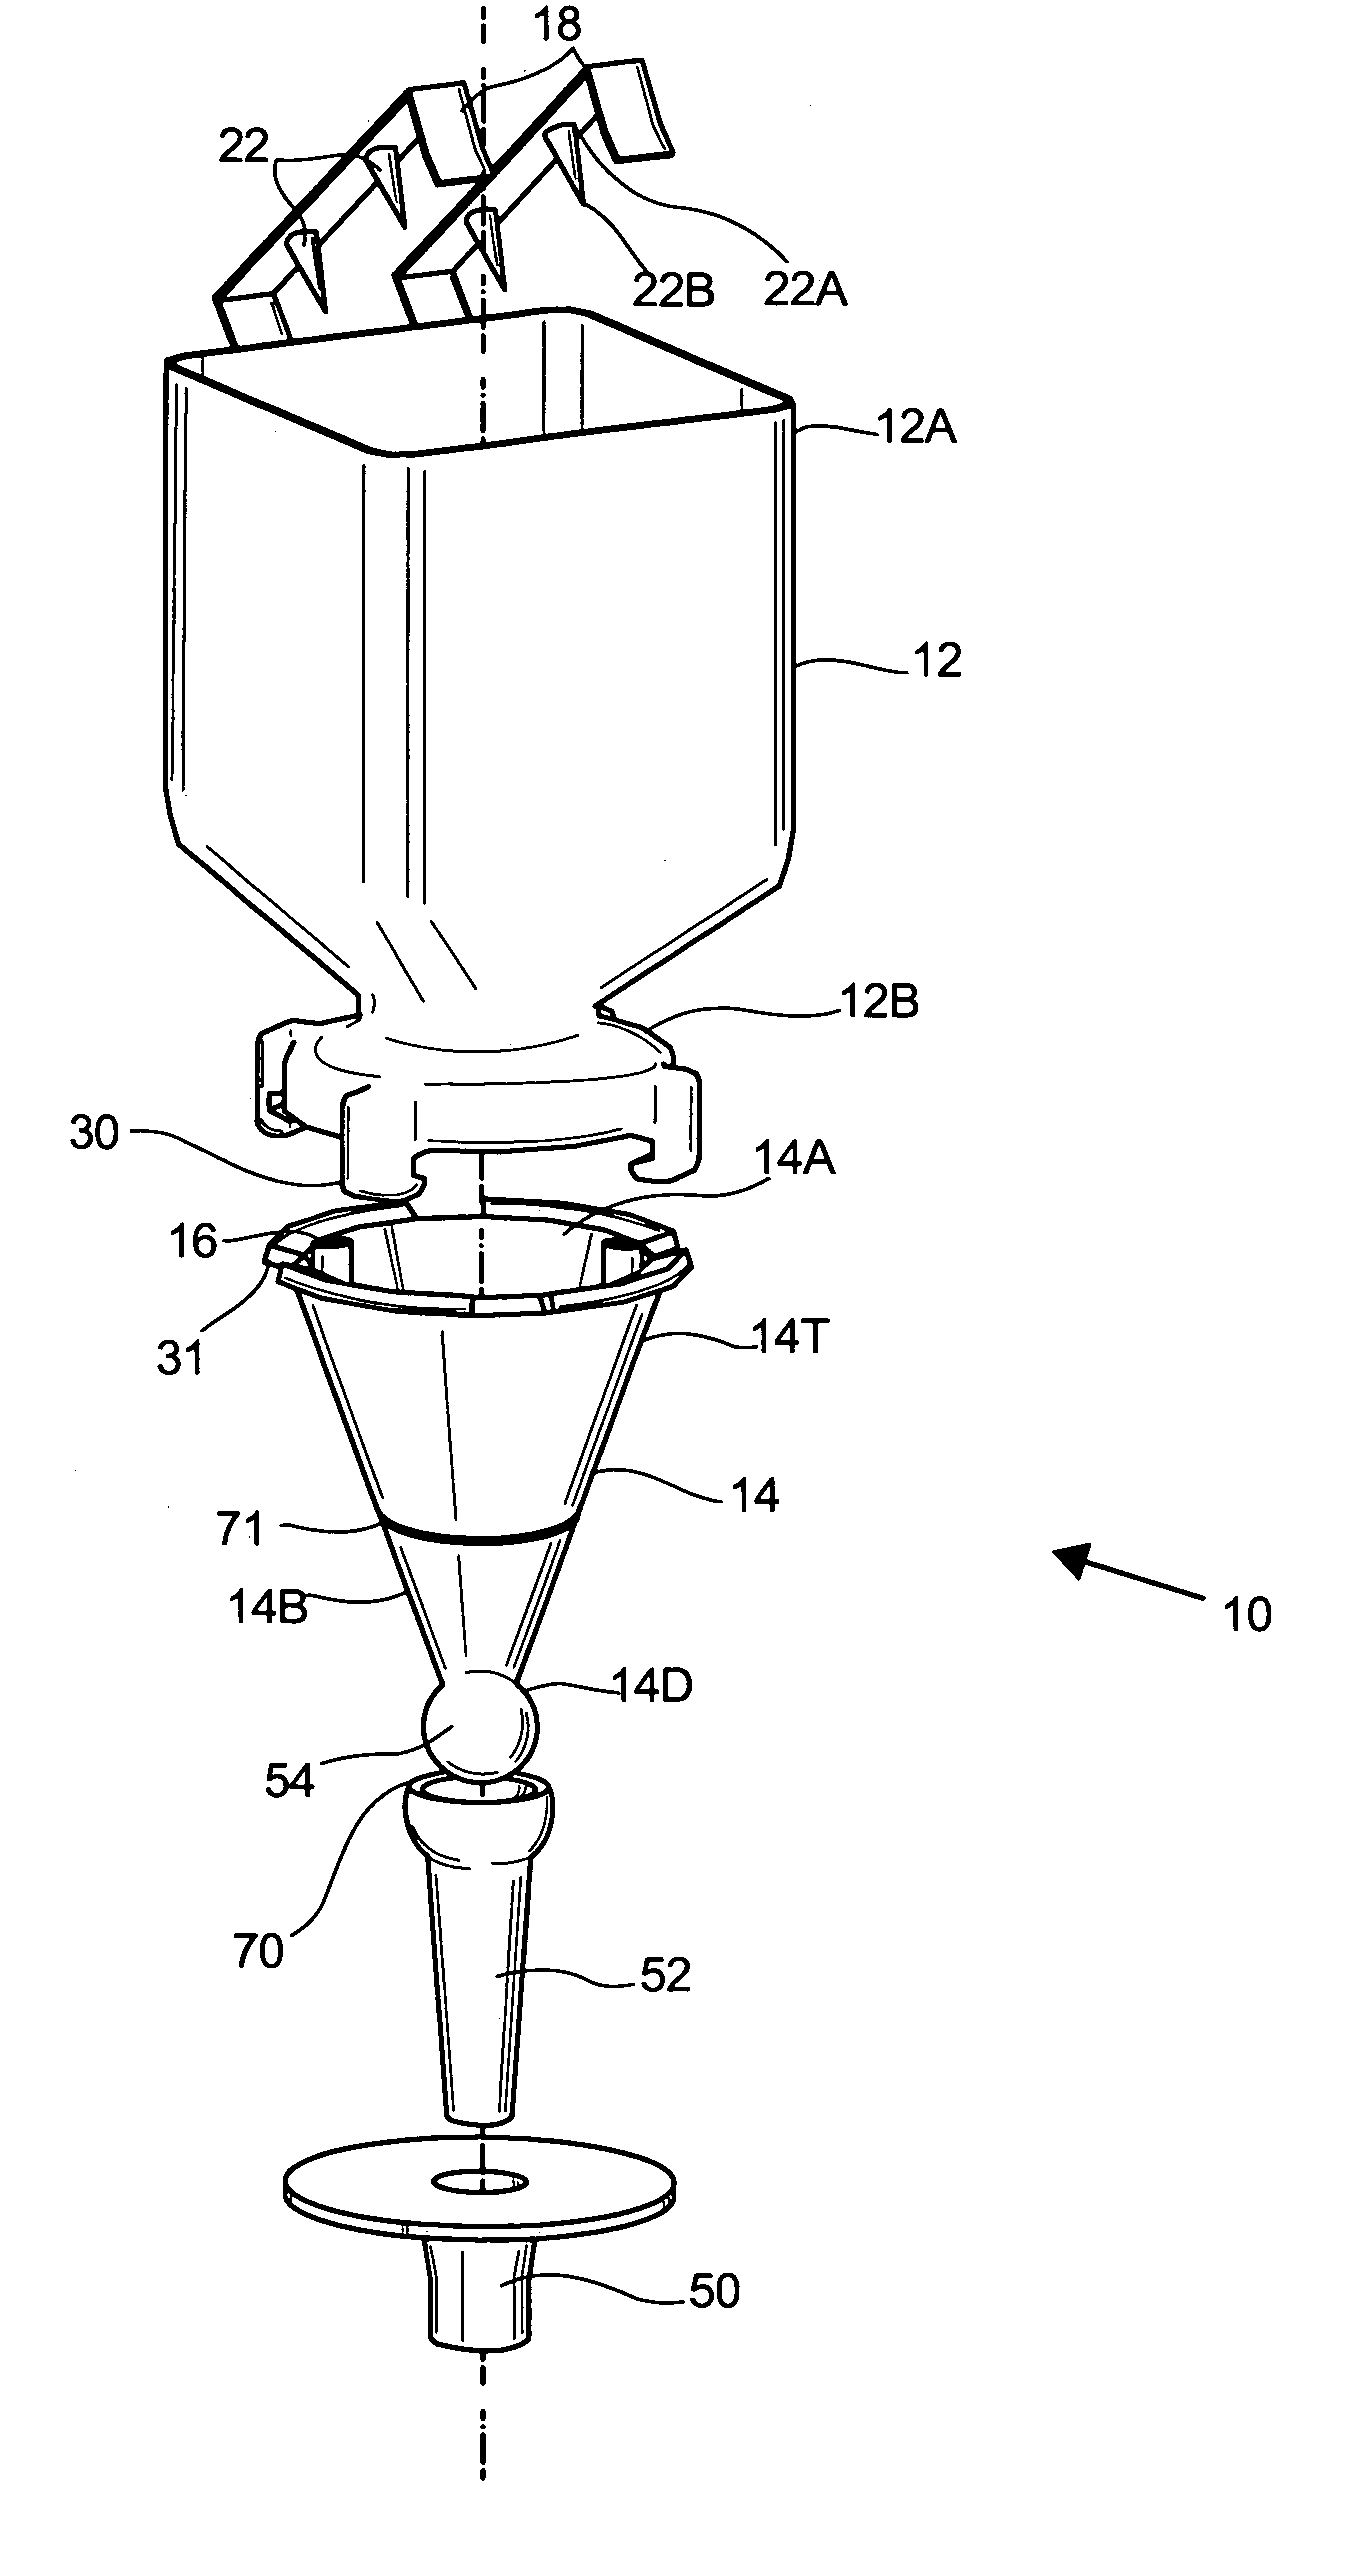 Multipurpose funnel system